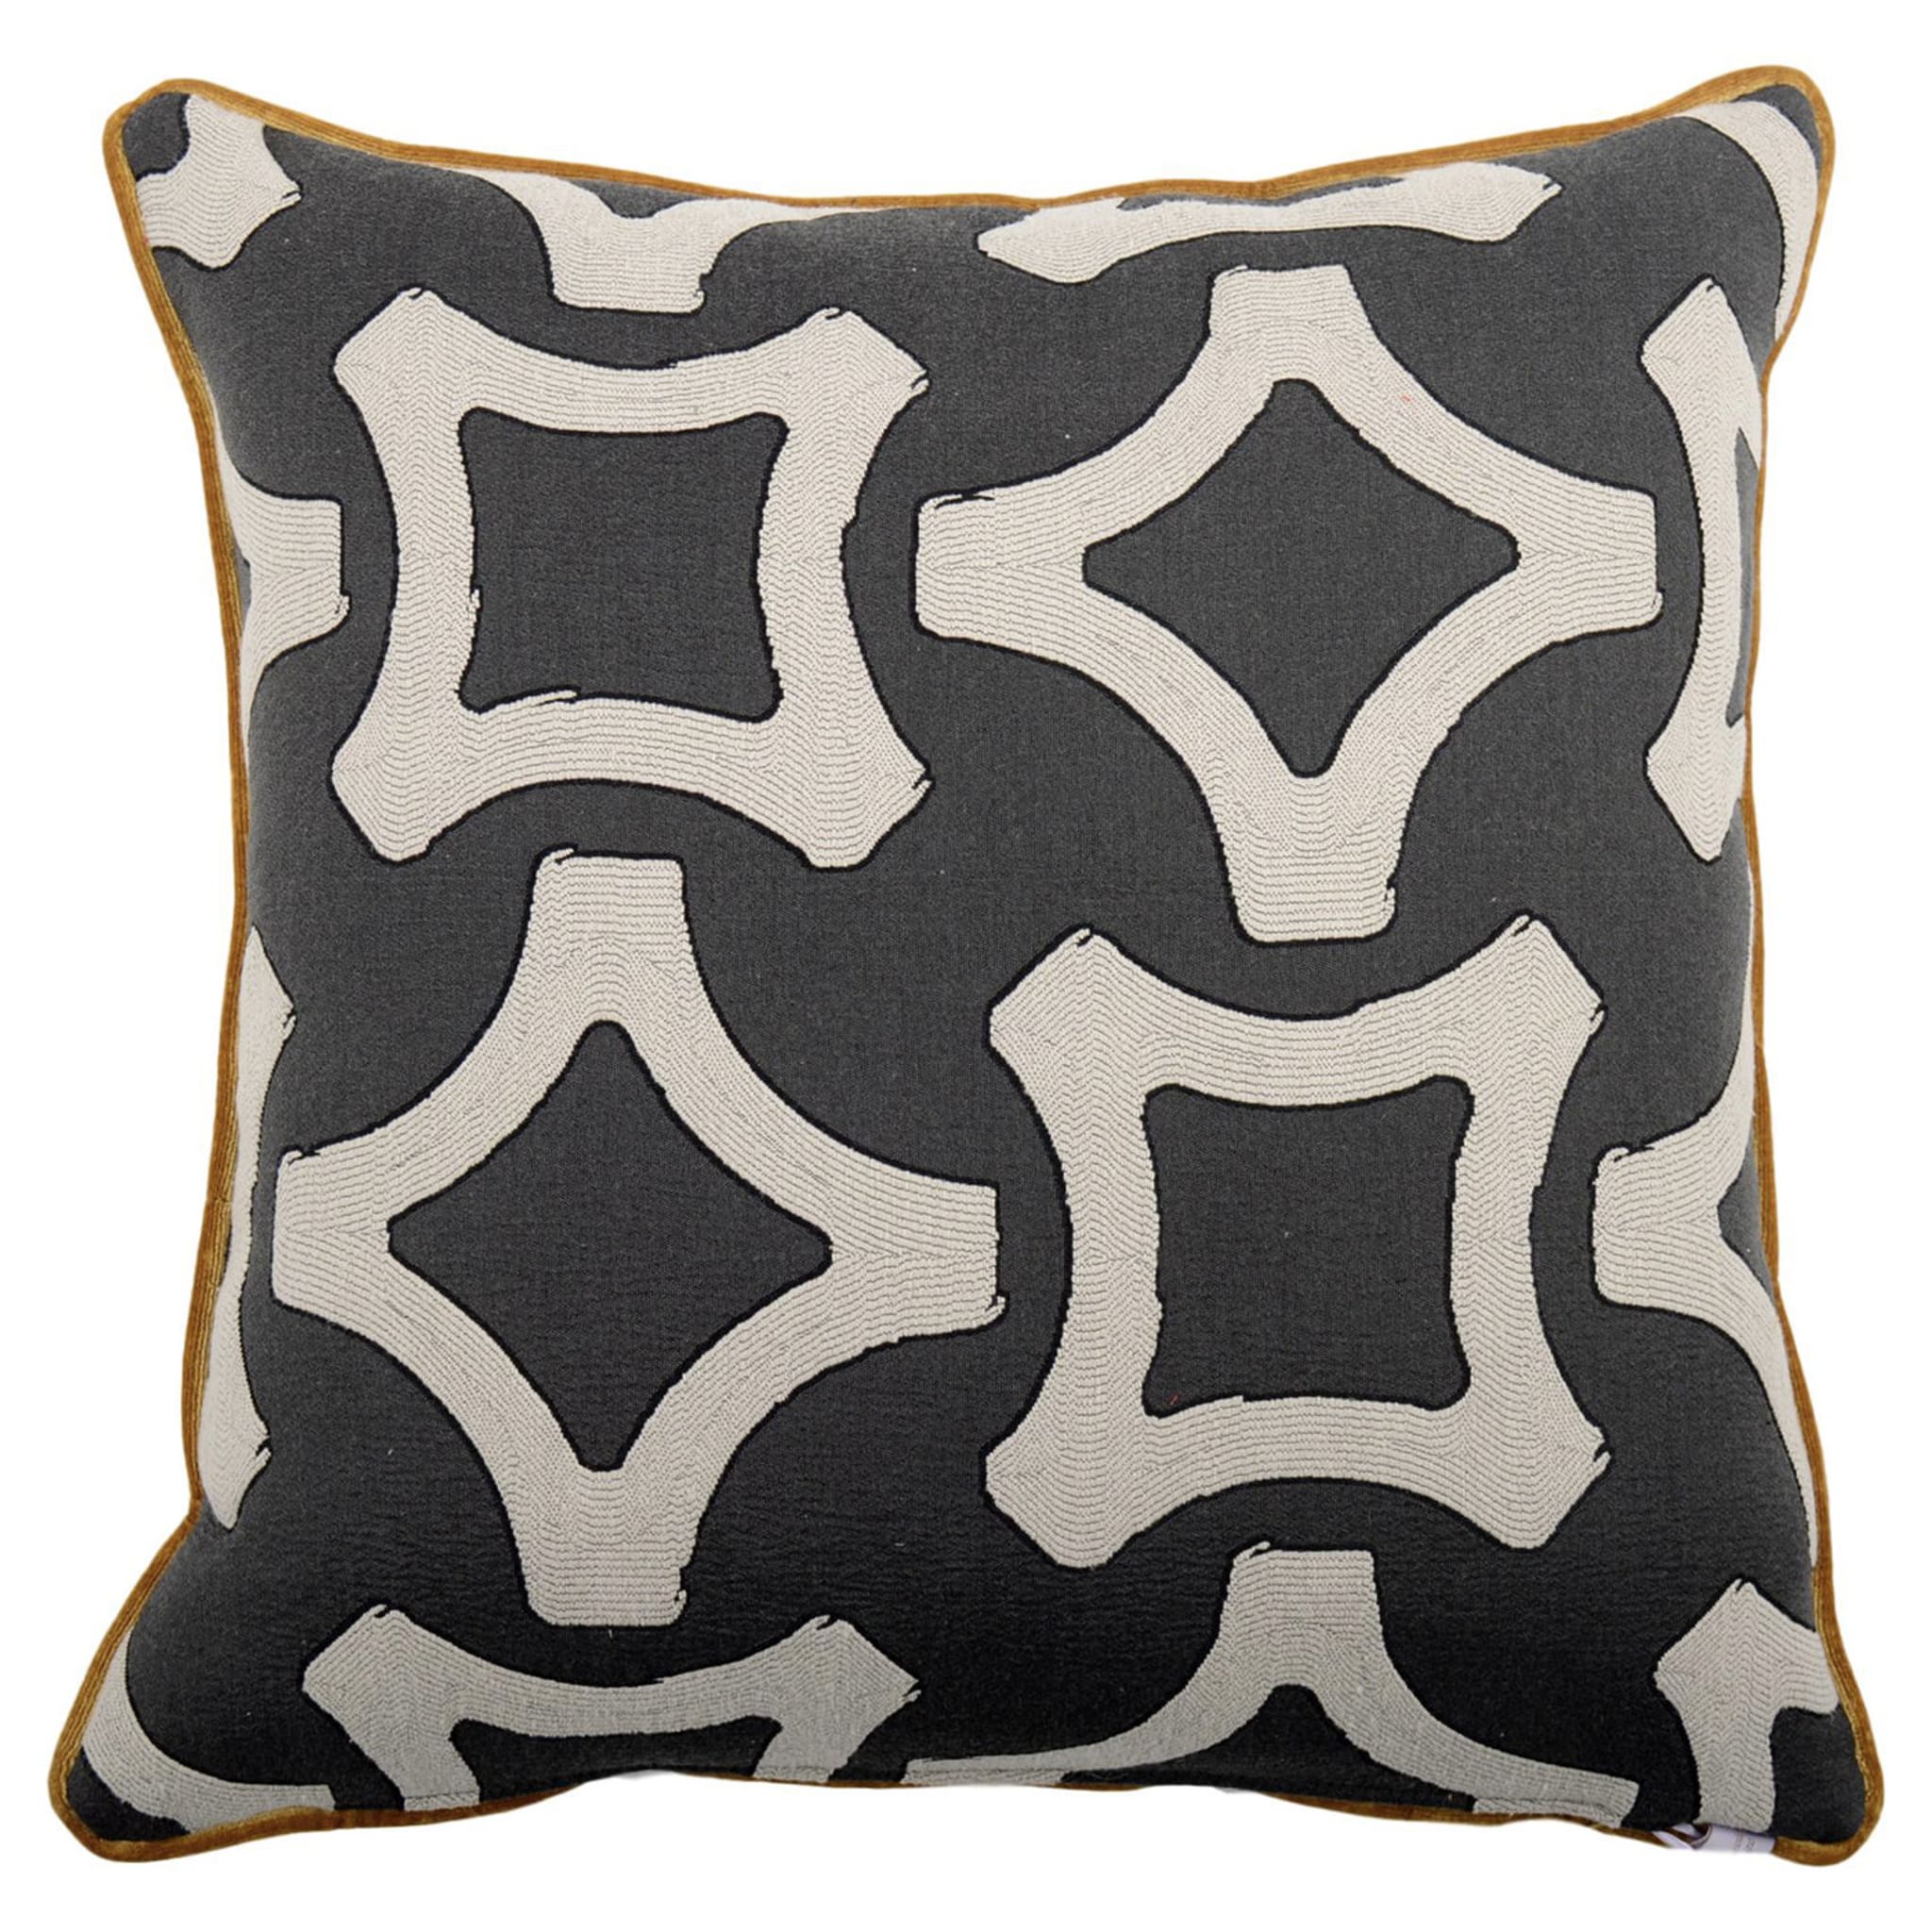 Black Grey Carré Cushion in false unit jacquard fabric - Alternative view 1